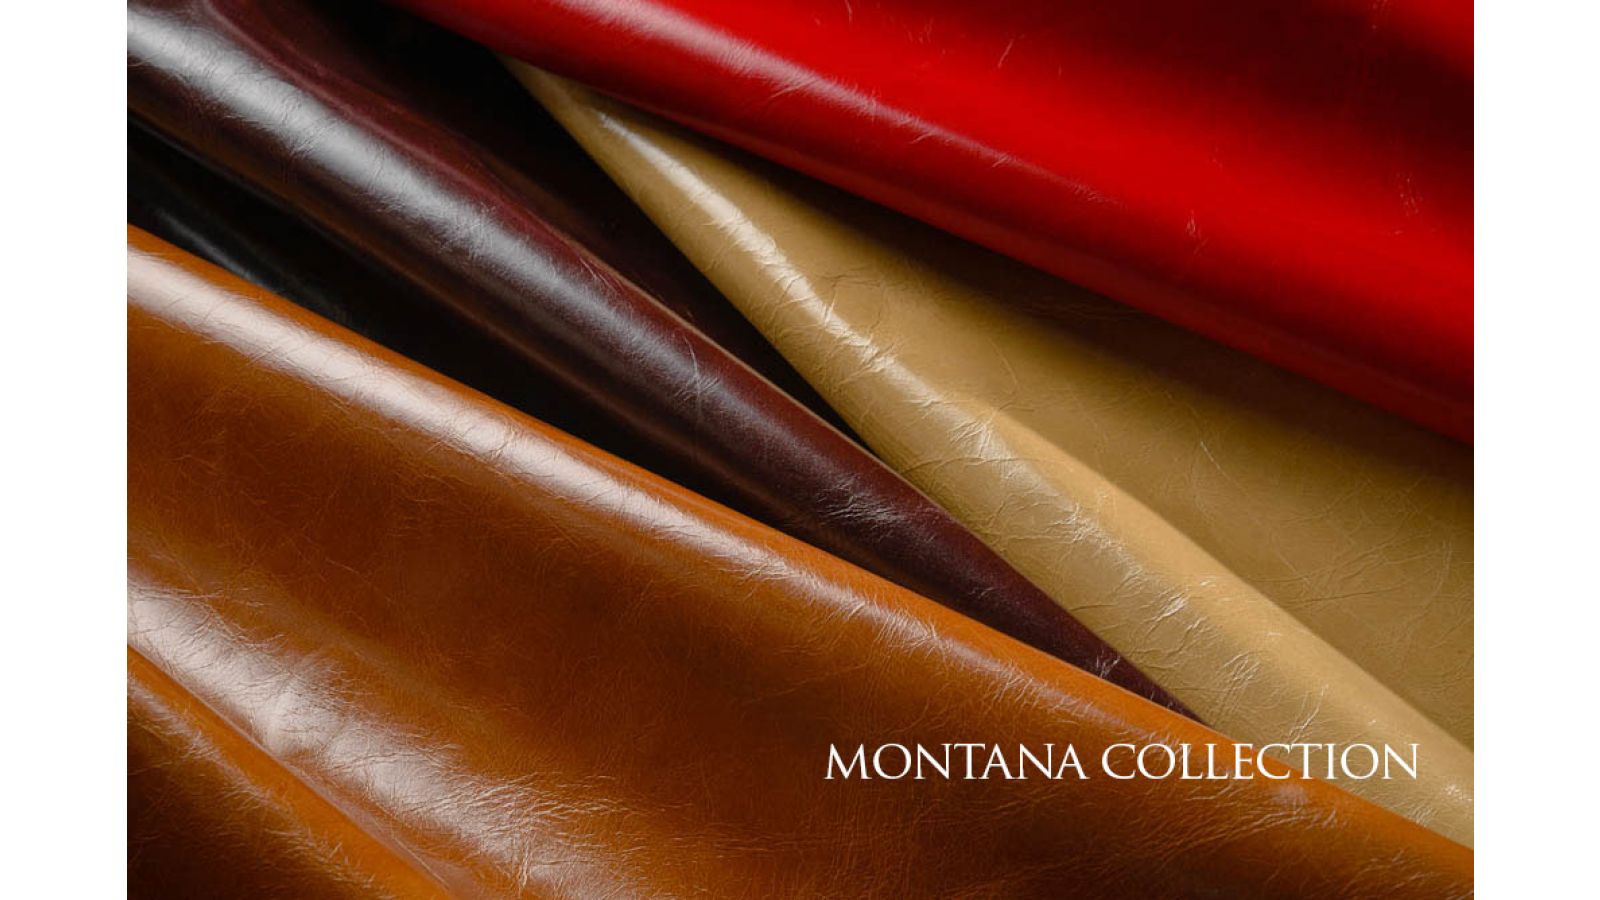 Montana Collection